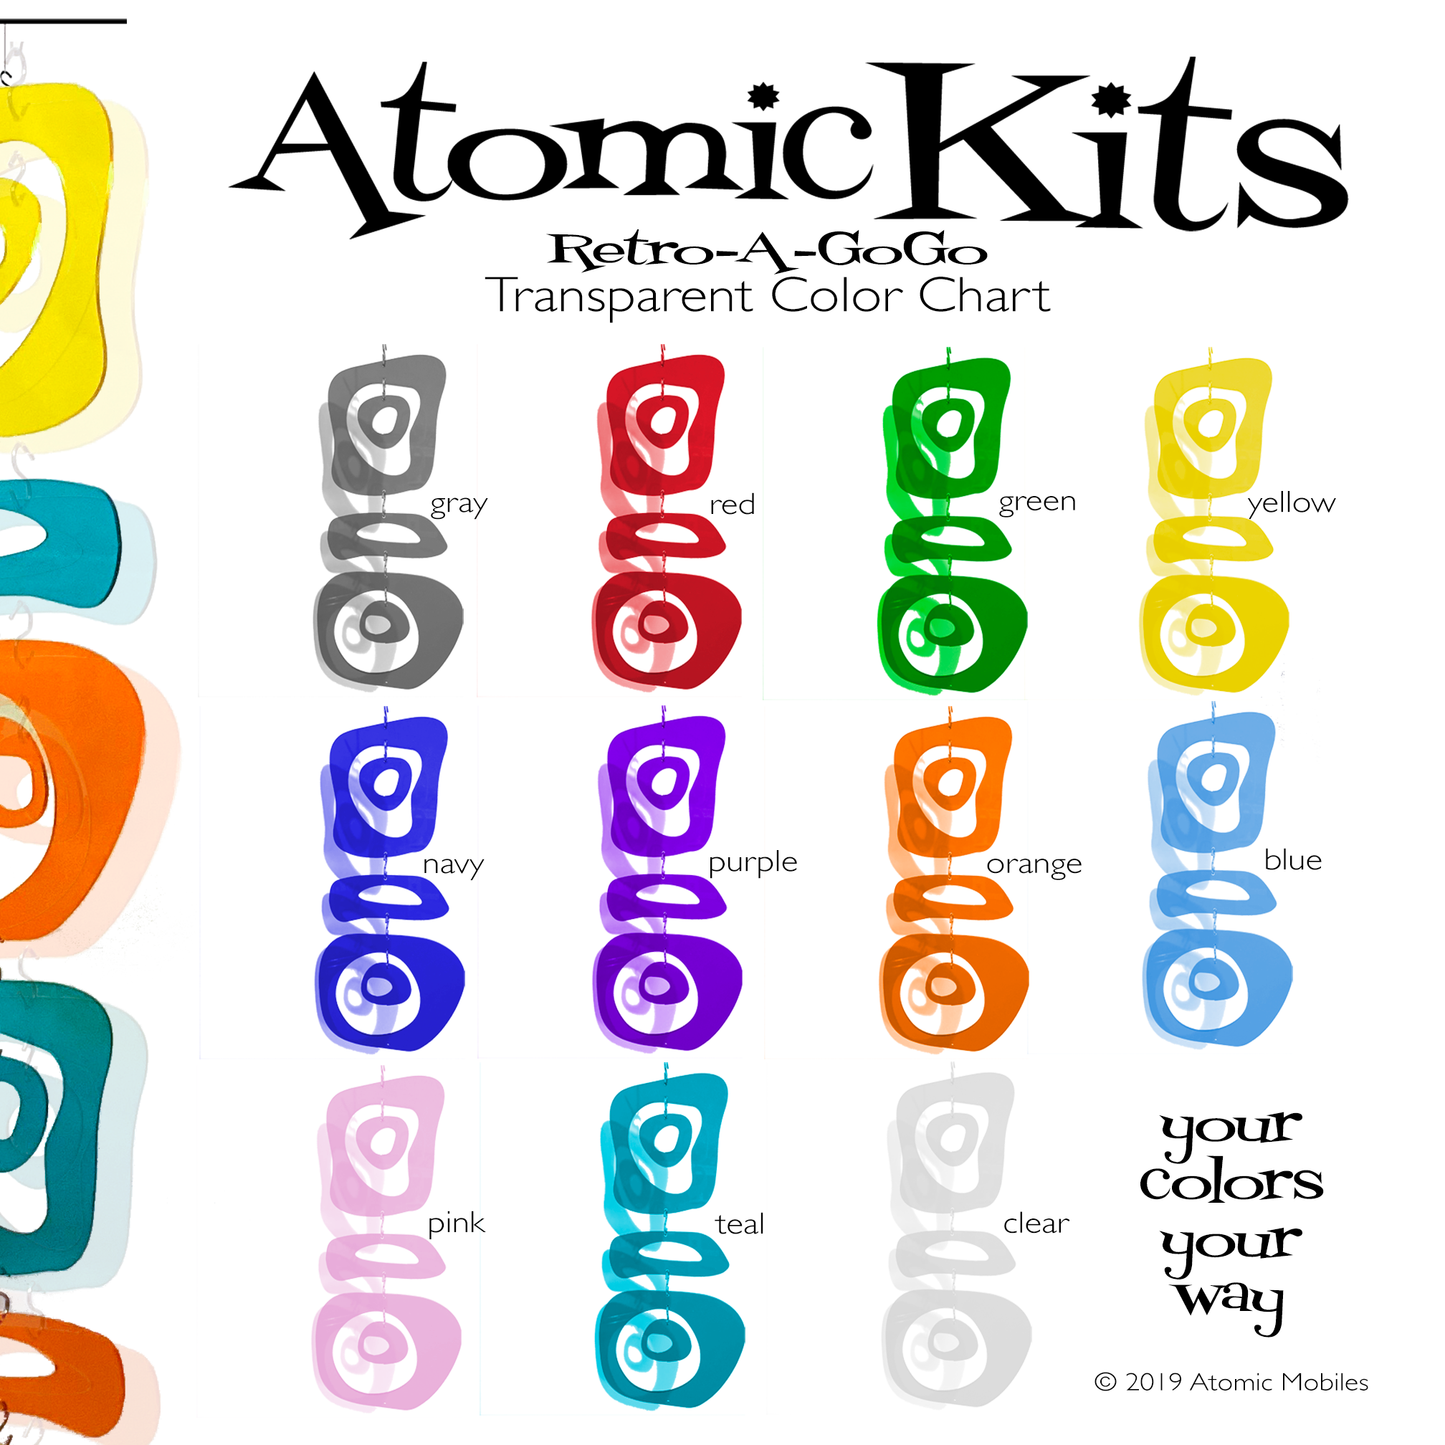 Retro-A-GoGo Beautiful Transparent Colors Chart by AtomicMobiles.com